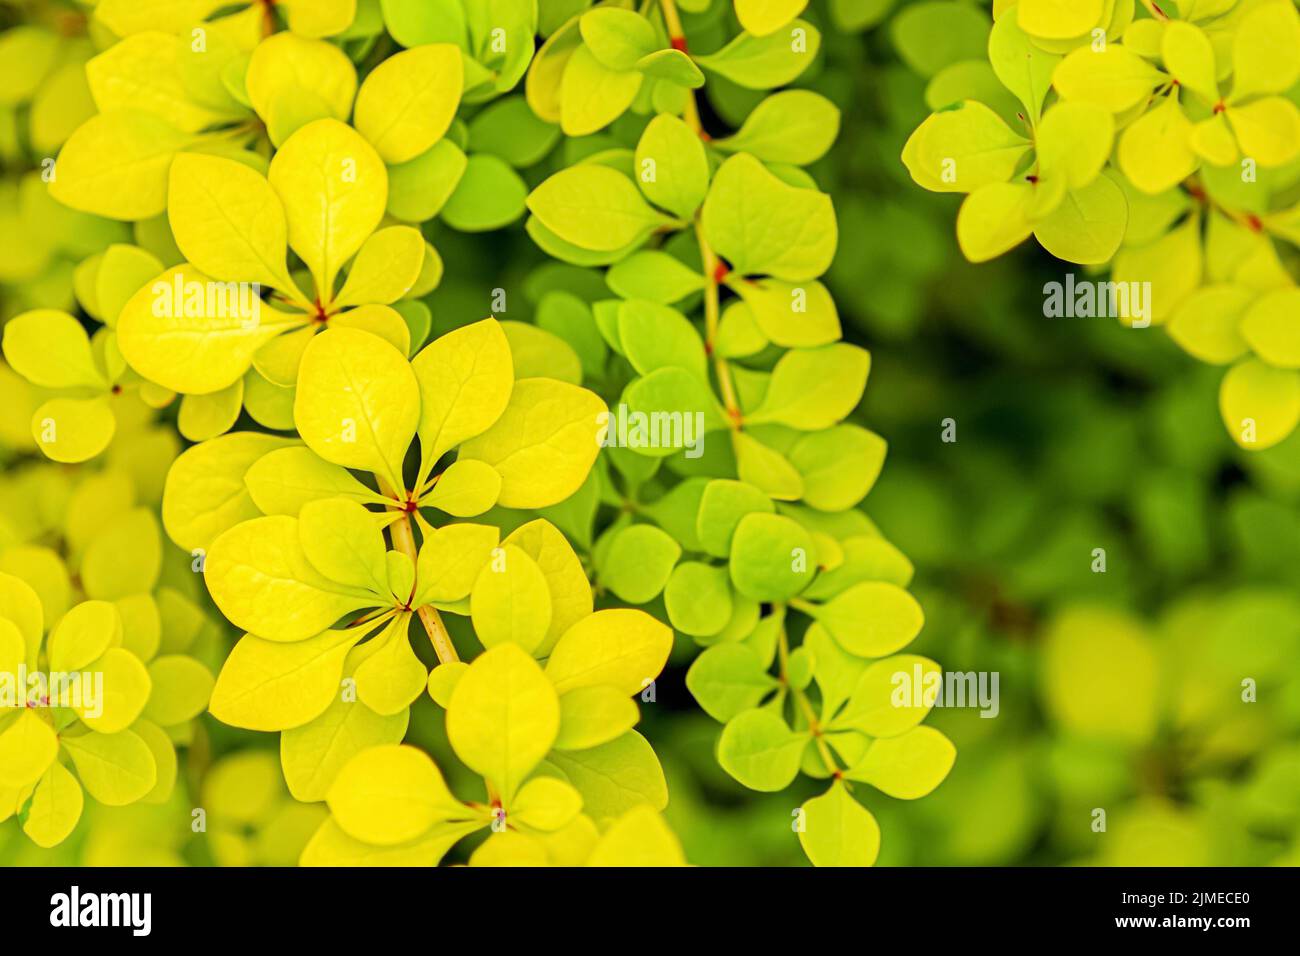 Golden Japanese barberry yellow green leaves, Berberis thunbergii Aurea foliage background Stock Photo